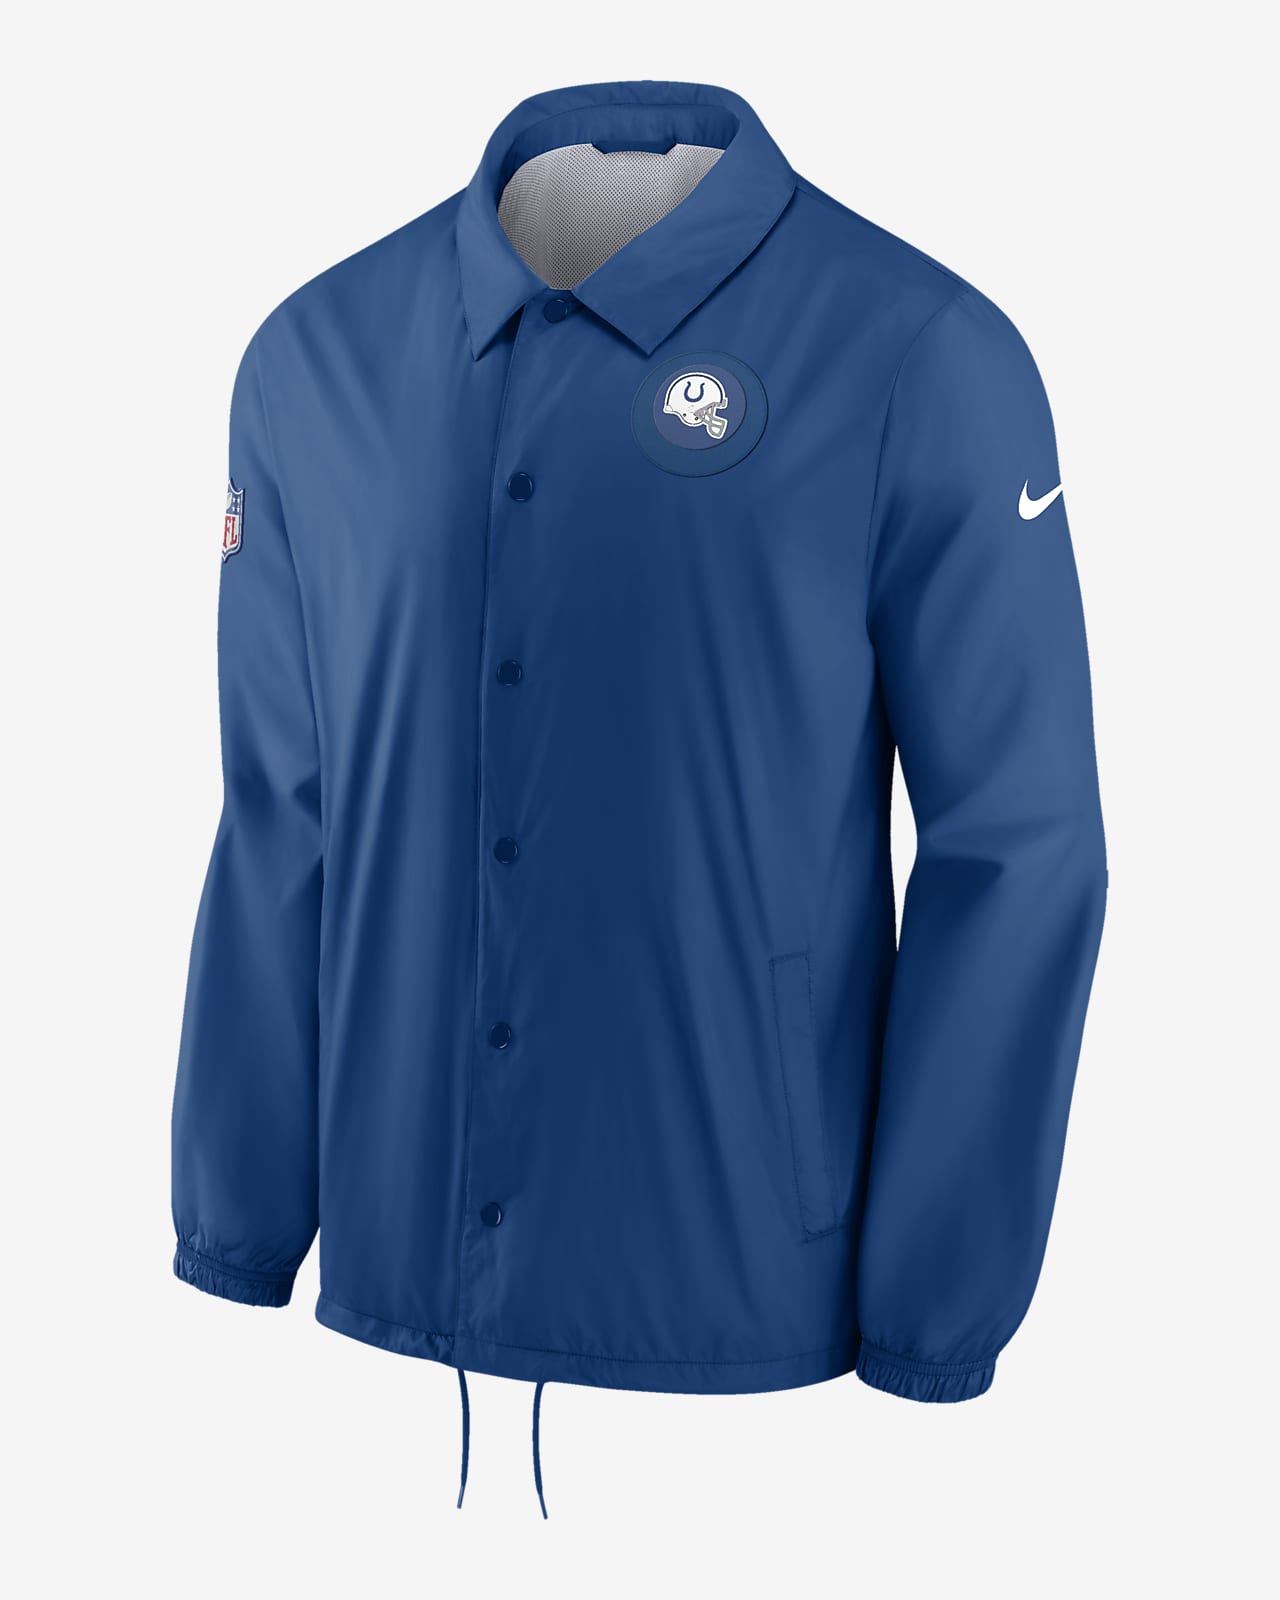 Nike Coaches (NFL Indianapolis Colts) Men's Jacket